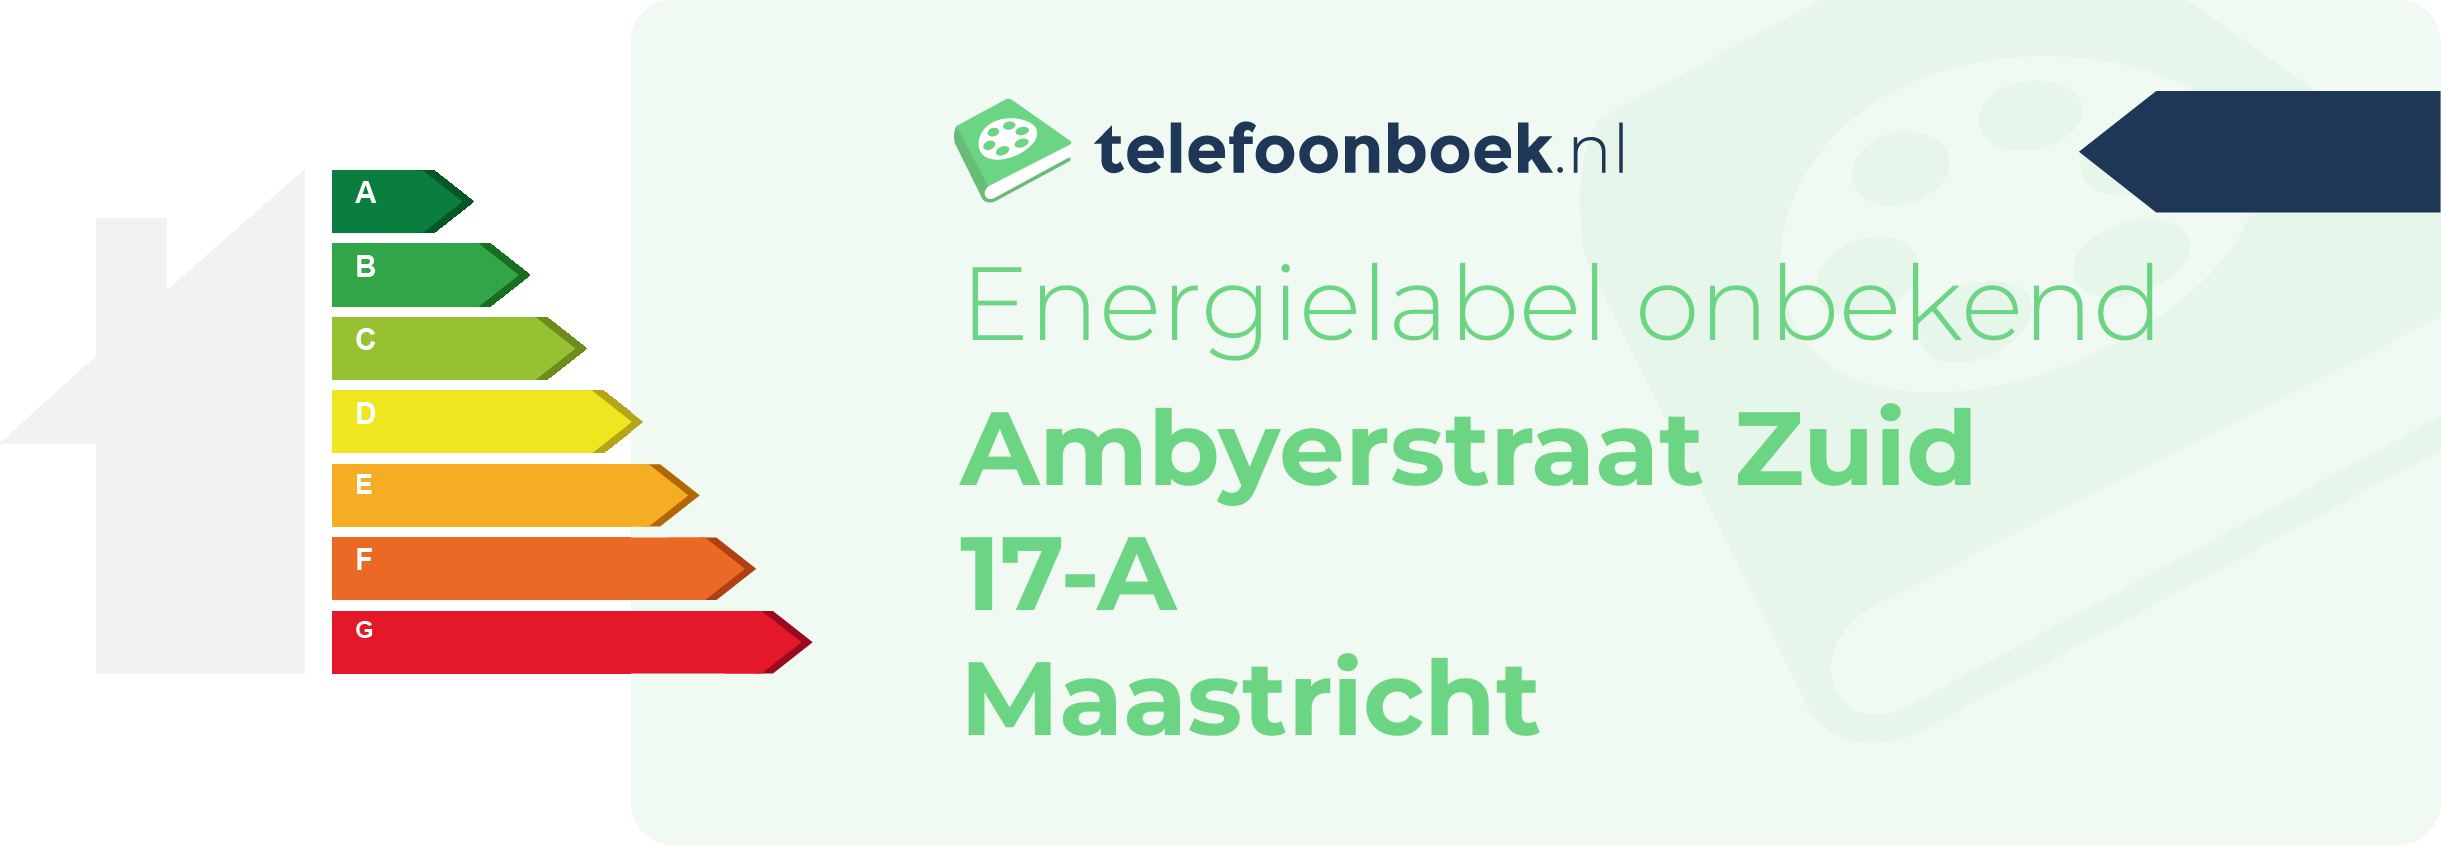 Energielabel Ambyerstraat Zuid 17-A Maastricht